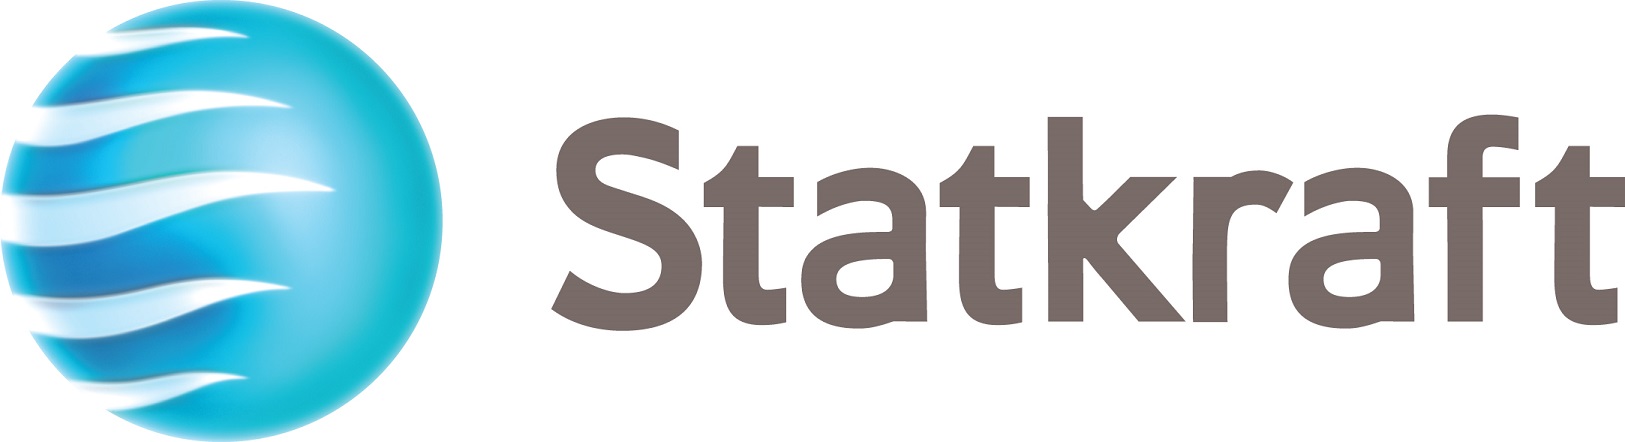 Statkraft Sverige AB Logo | OnePartnerGroup